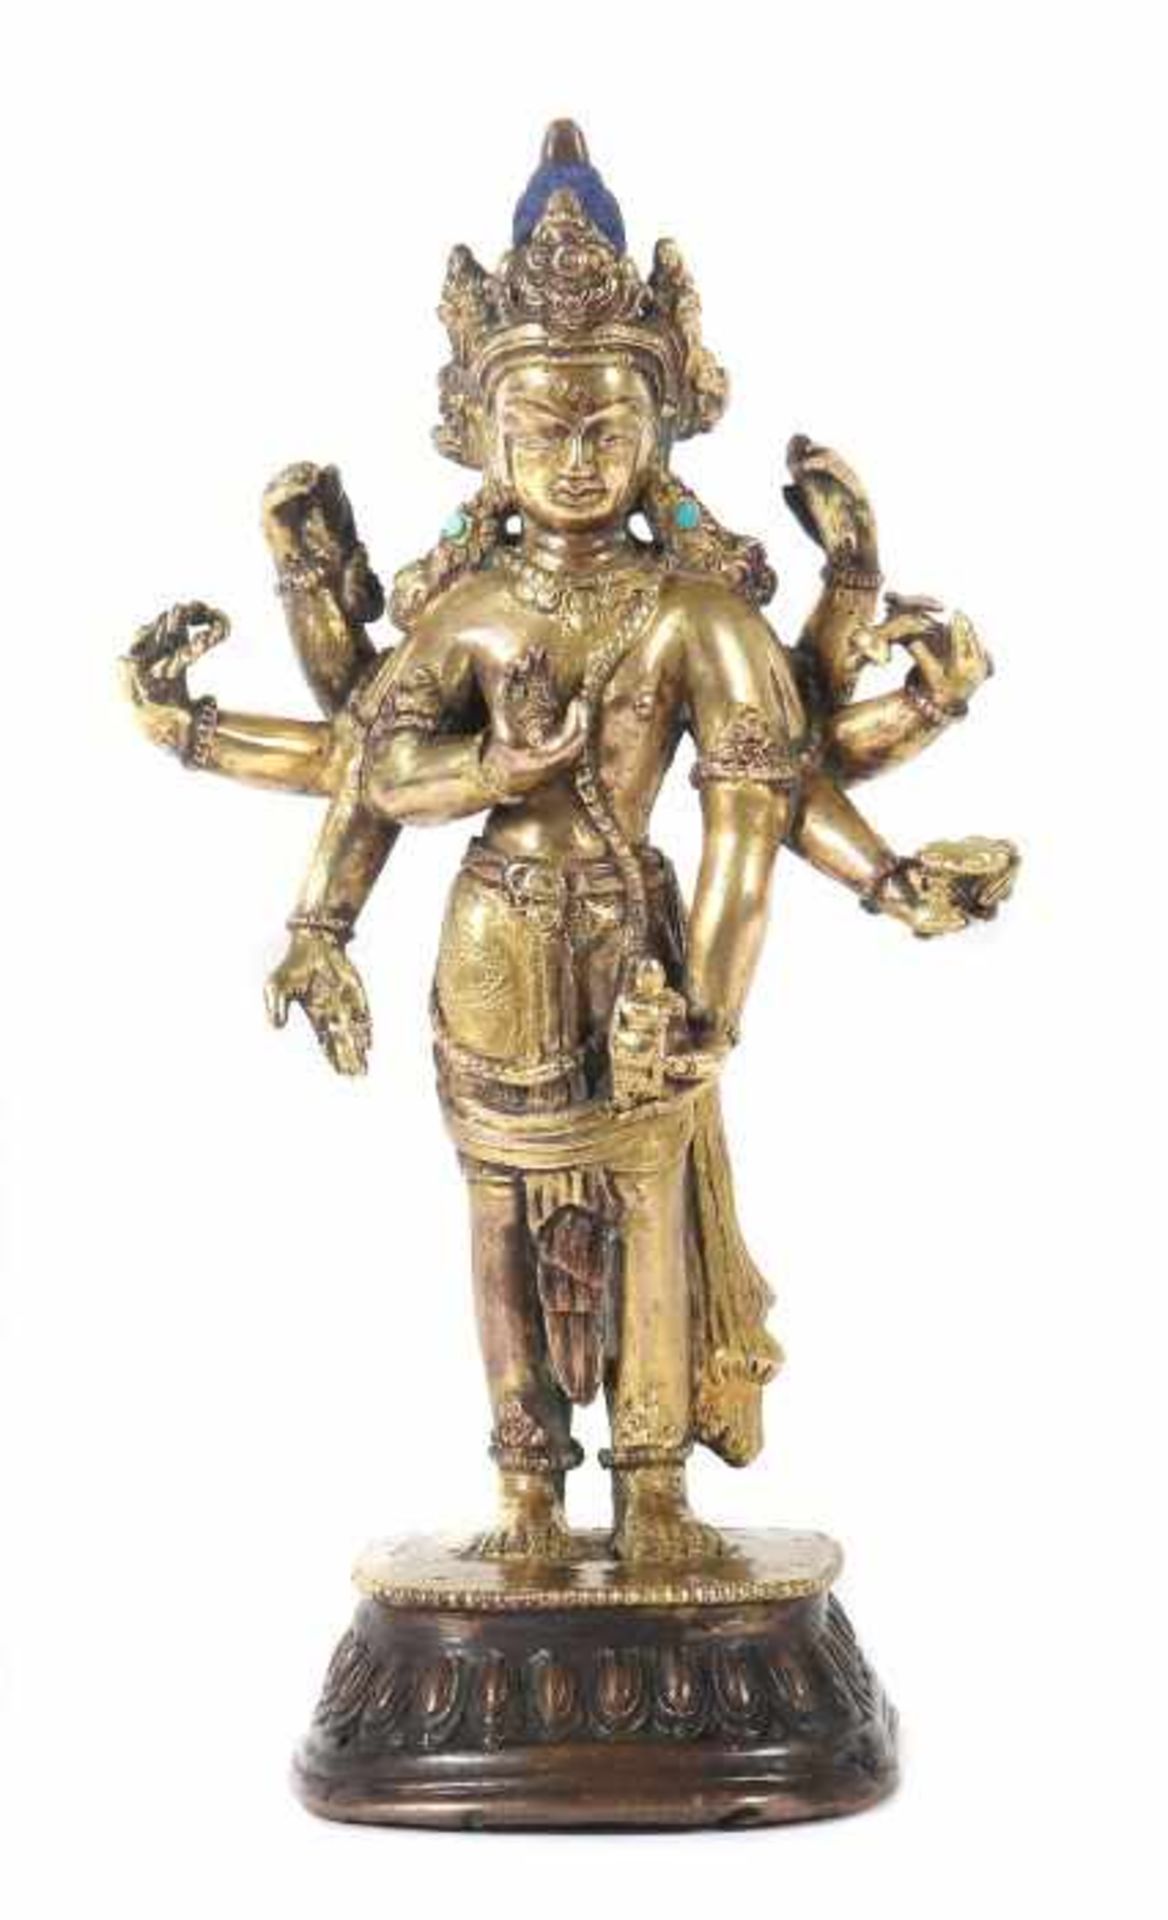 Avalokiteshvara AmoghapashaTibet/Nepal, wohl spätes 19. Jh., Bronze/feuervergoldet, vollplastische